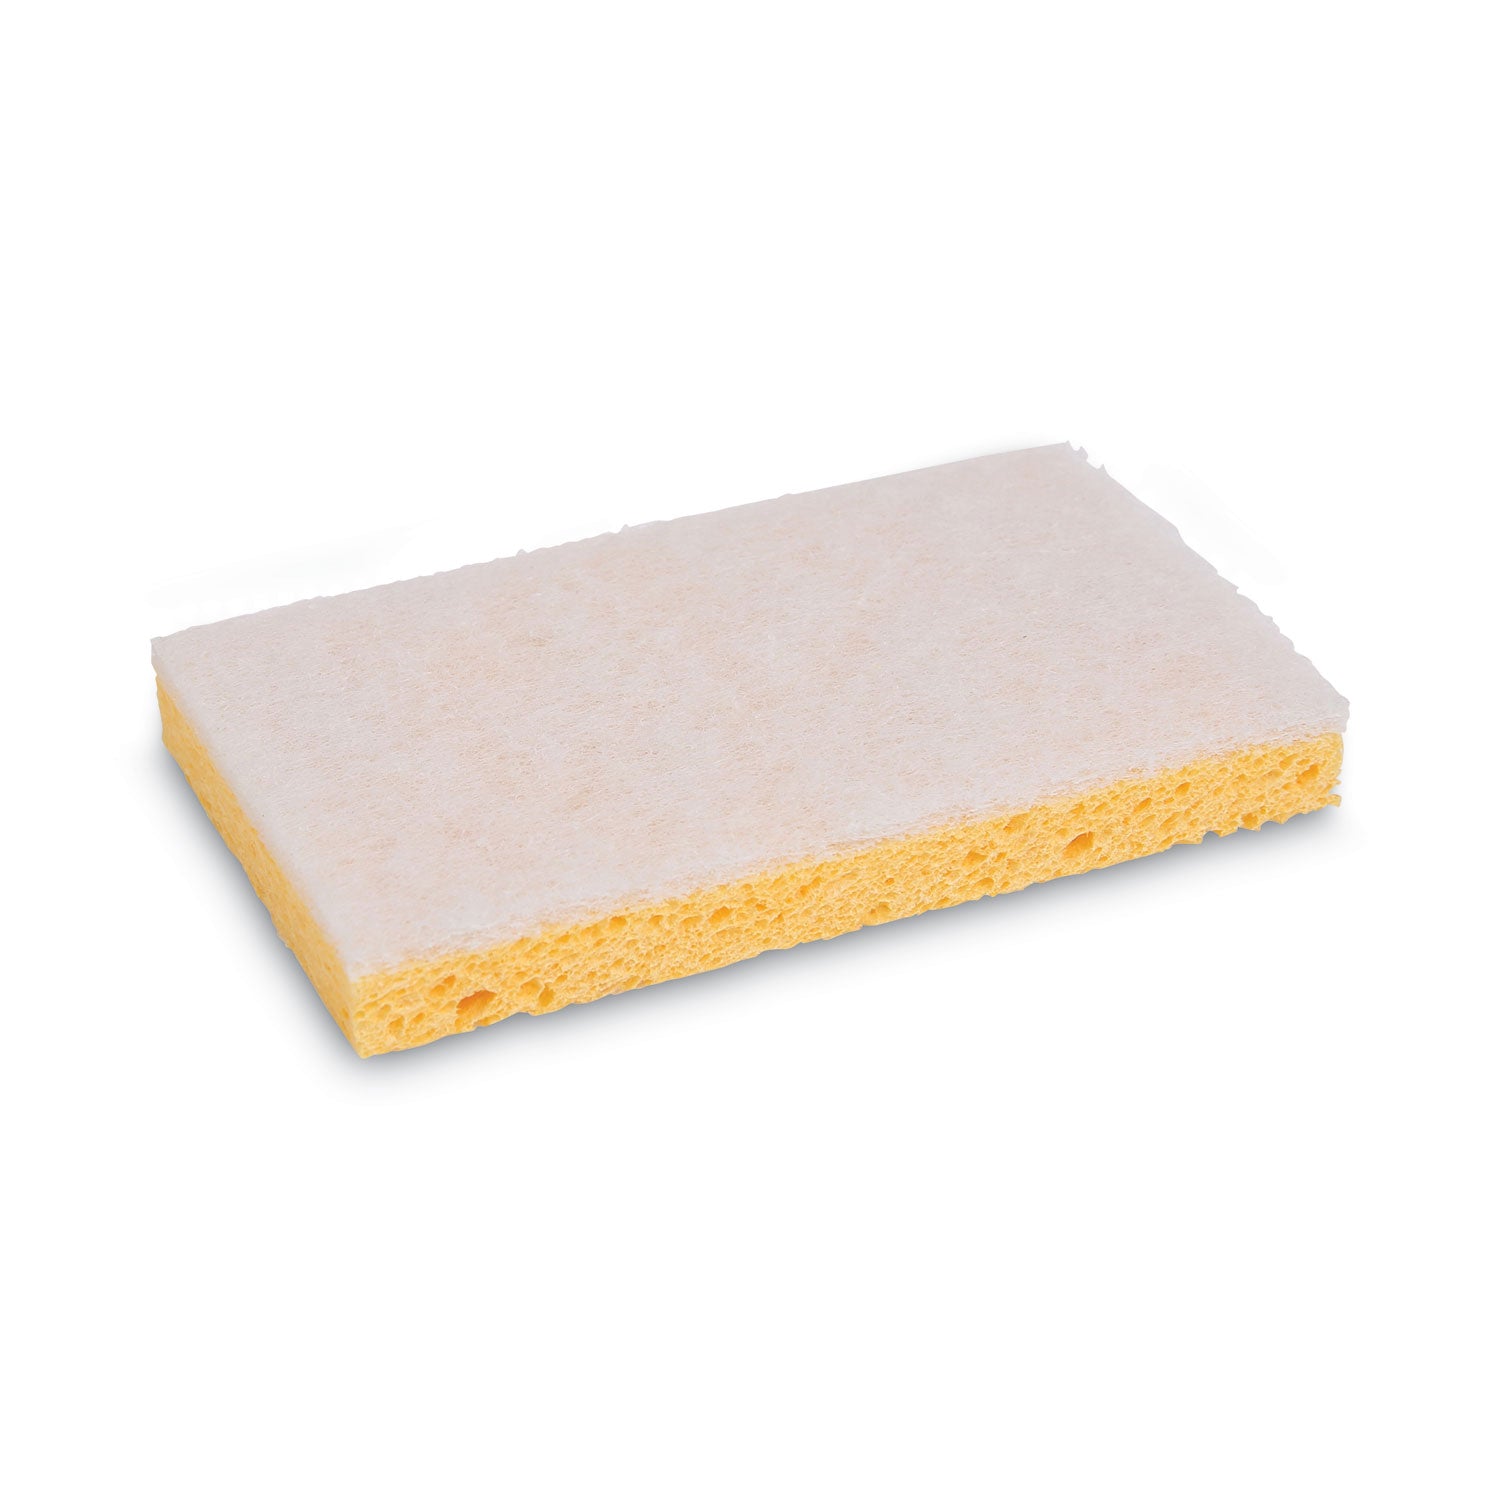 Scrubbing Sponge, Light Duty, 3.6 x 6.1, 0.7" Thick, Yellow/White, Individually Wrapped, 20/Carton - 